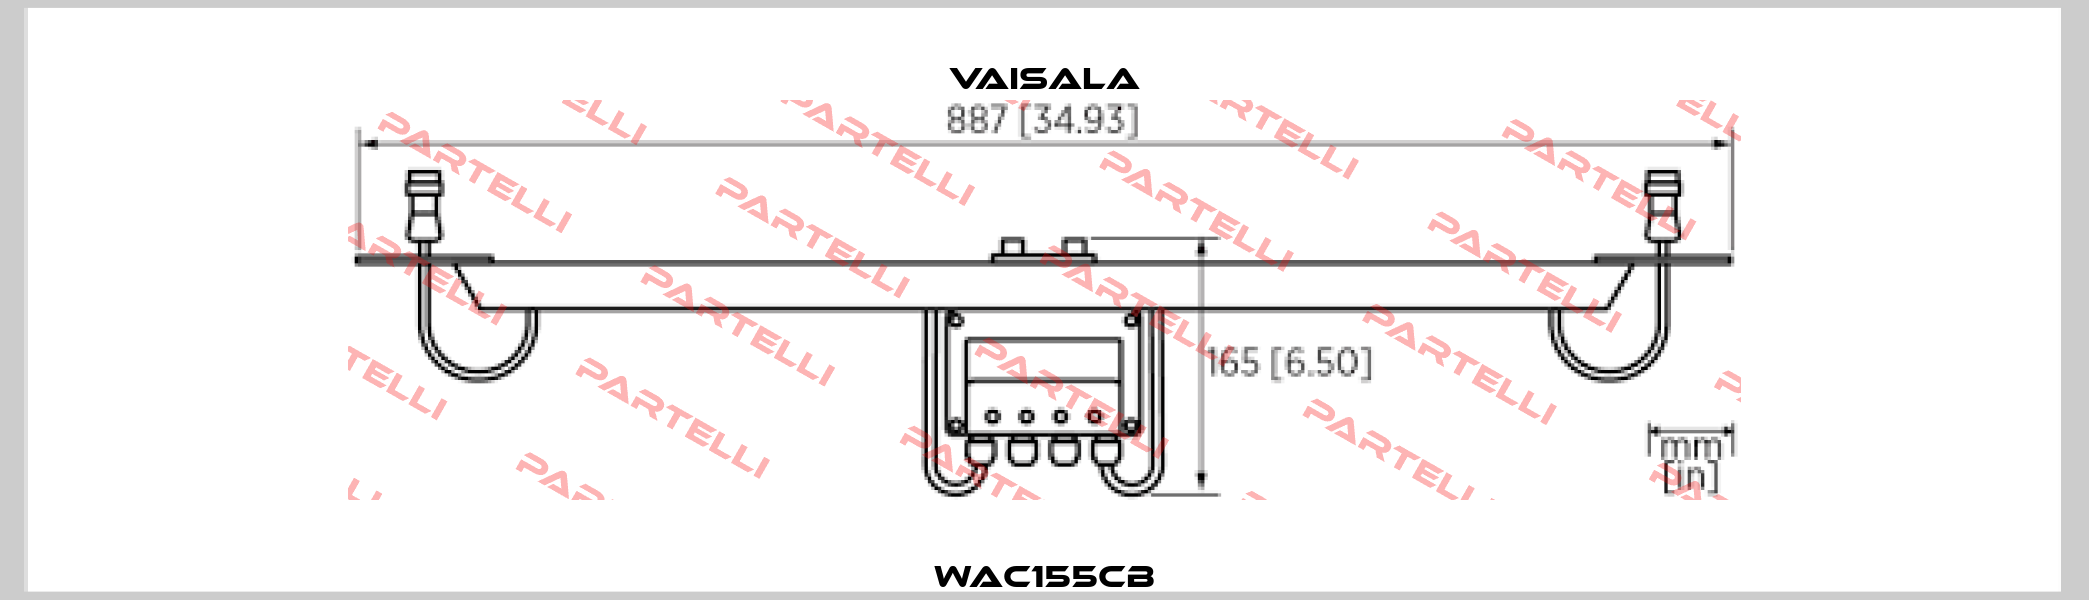 WAC155CB Vaisala